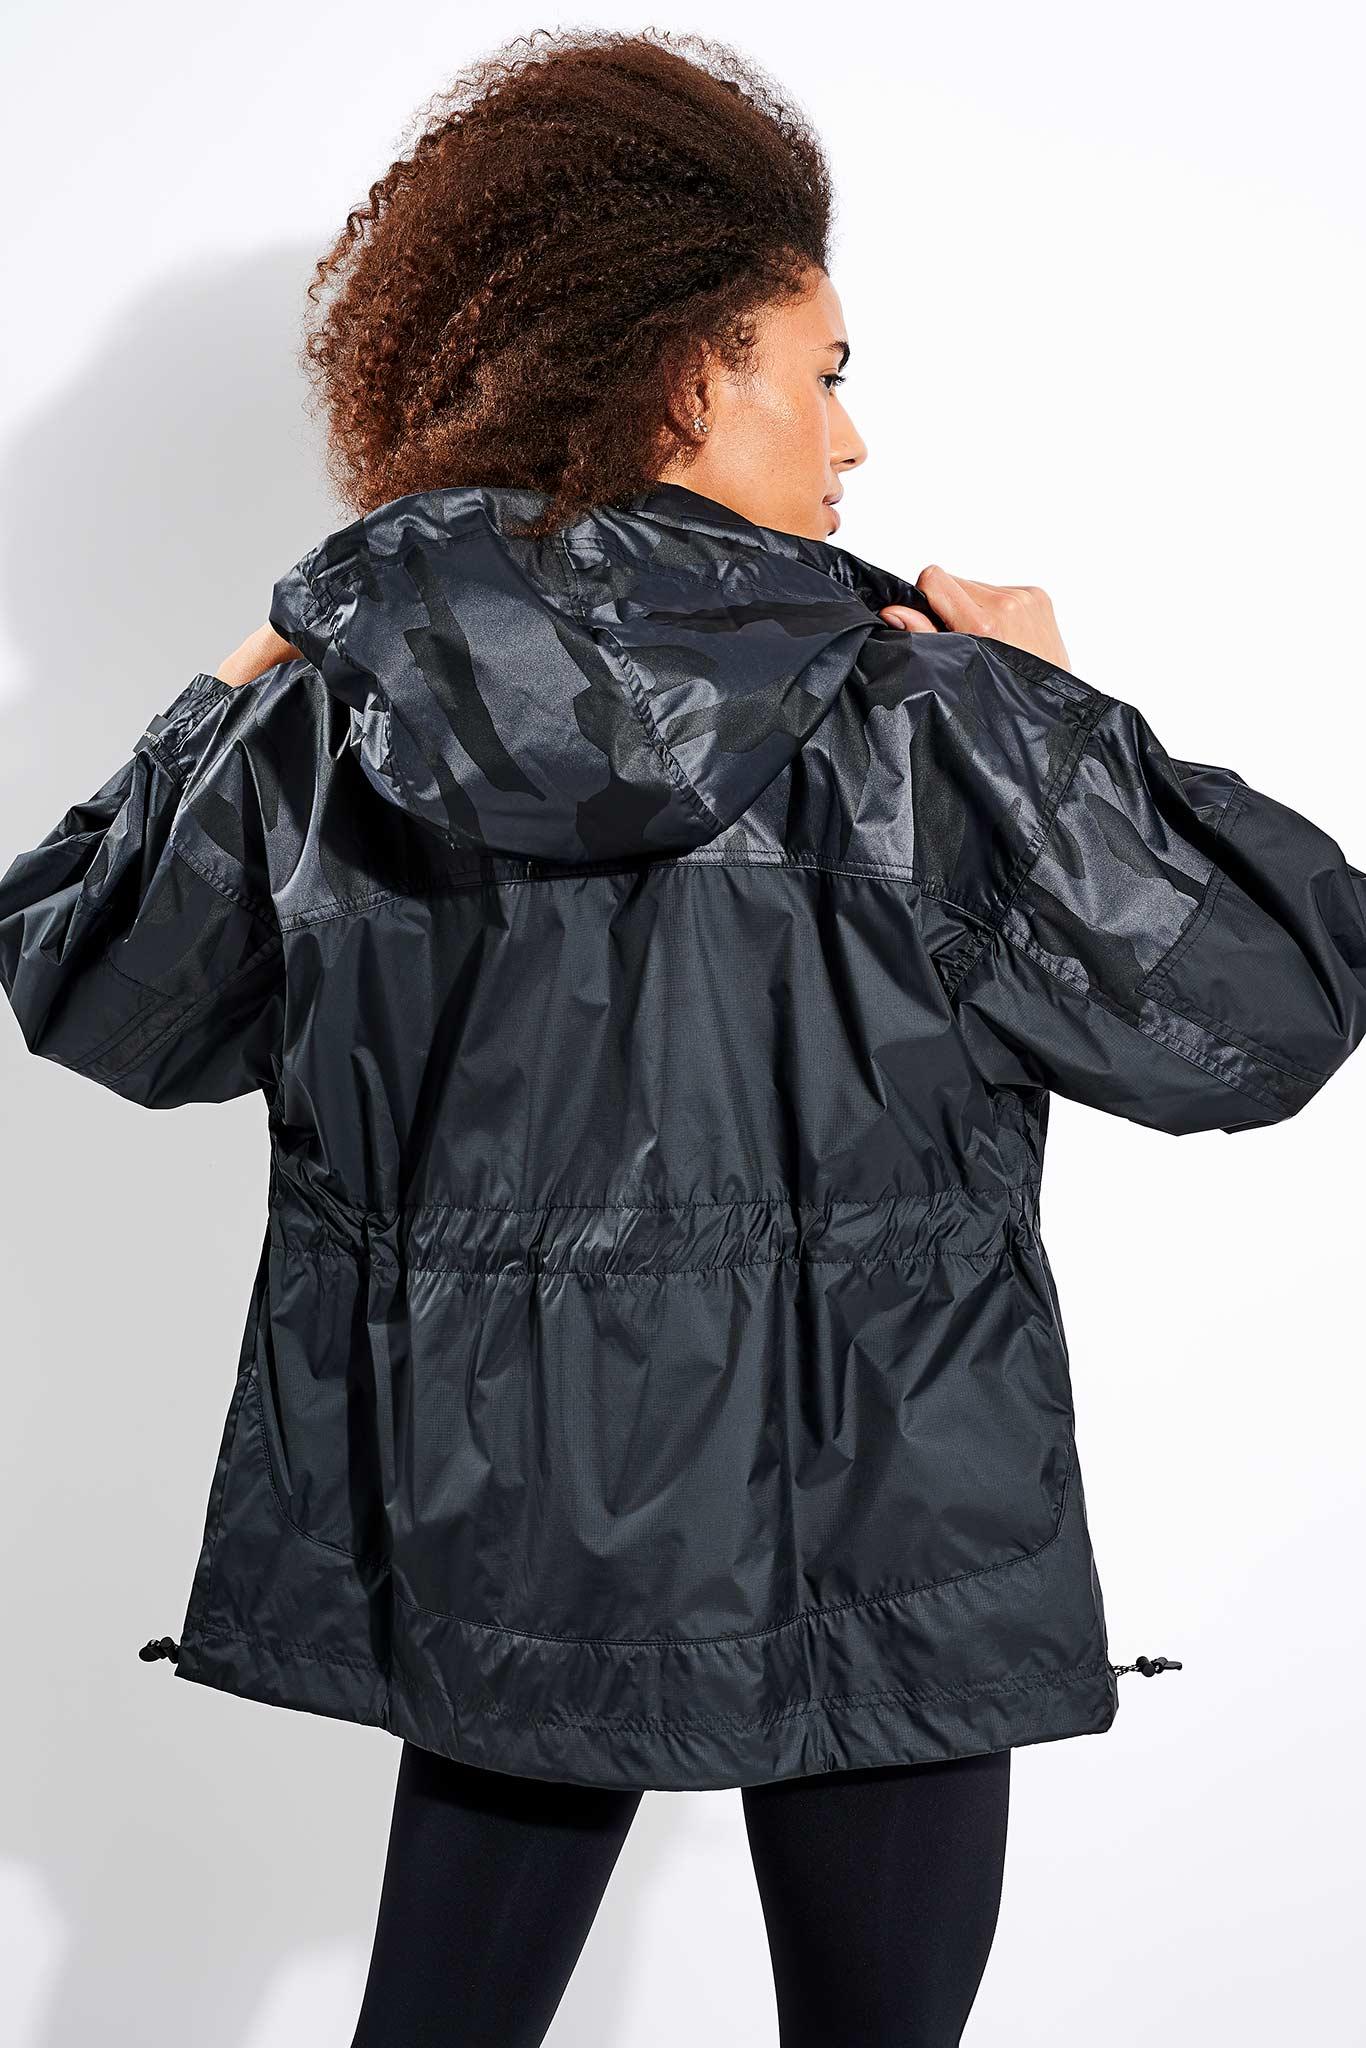 adidas By Stella McCartney Truepace Jacquard Jacket in Black | Lyst